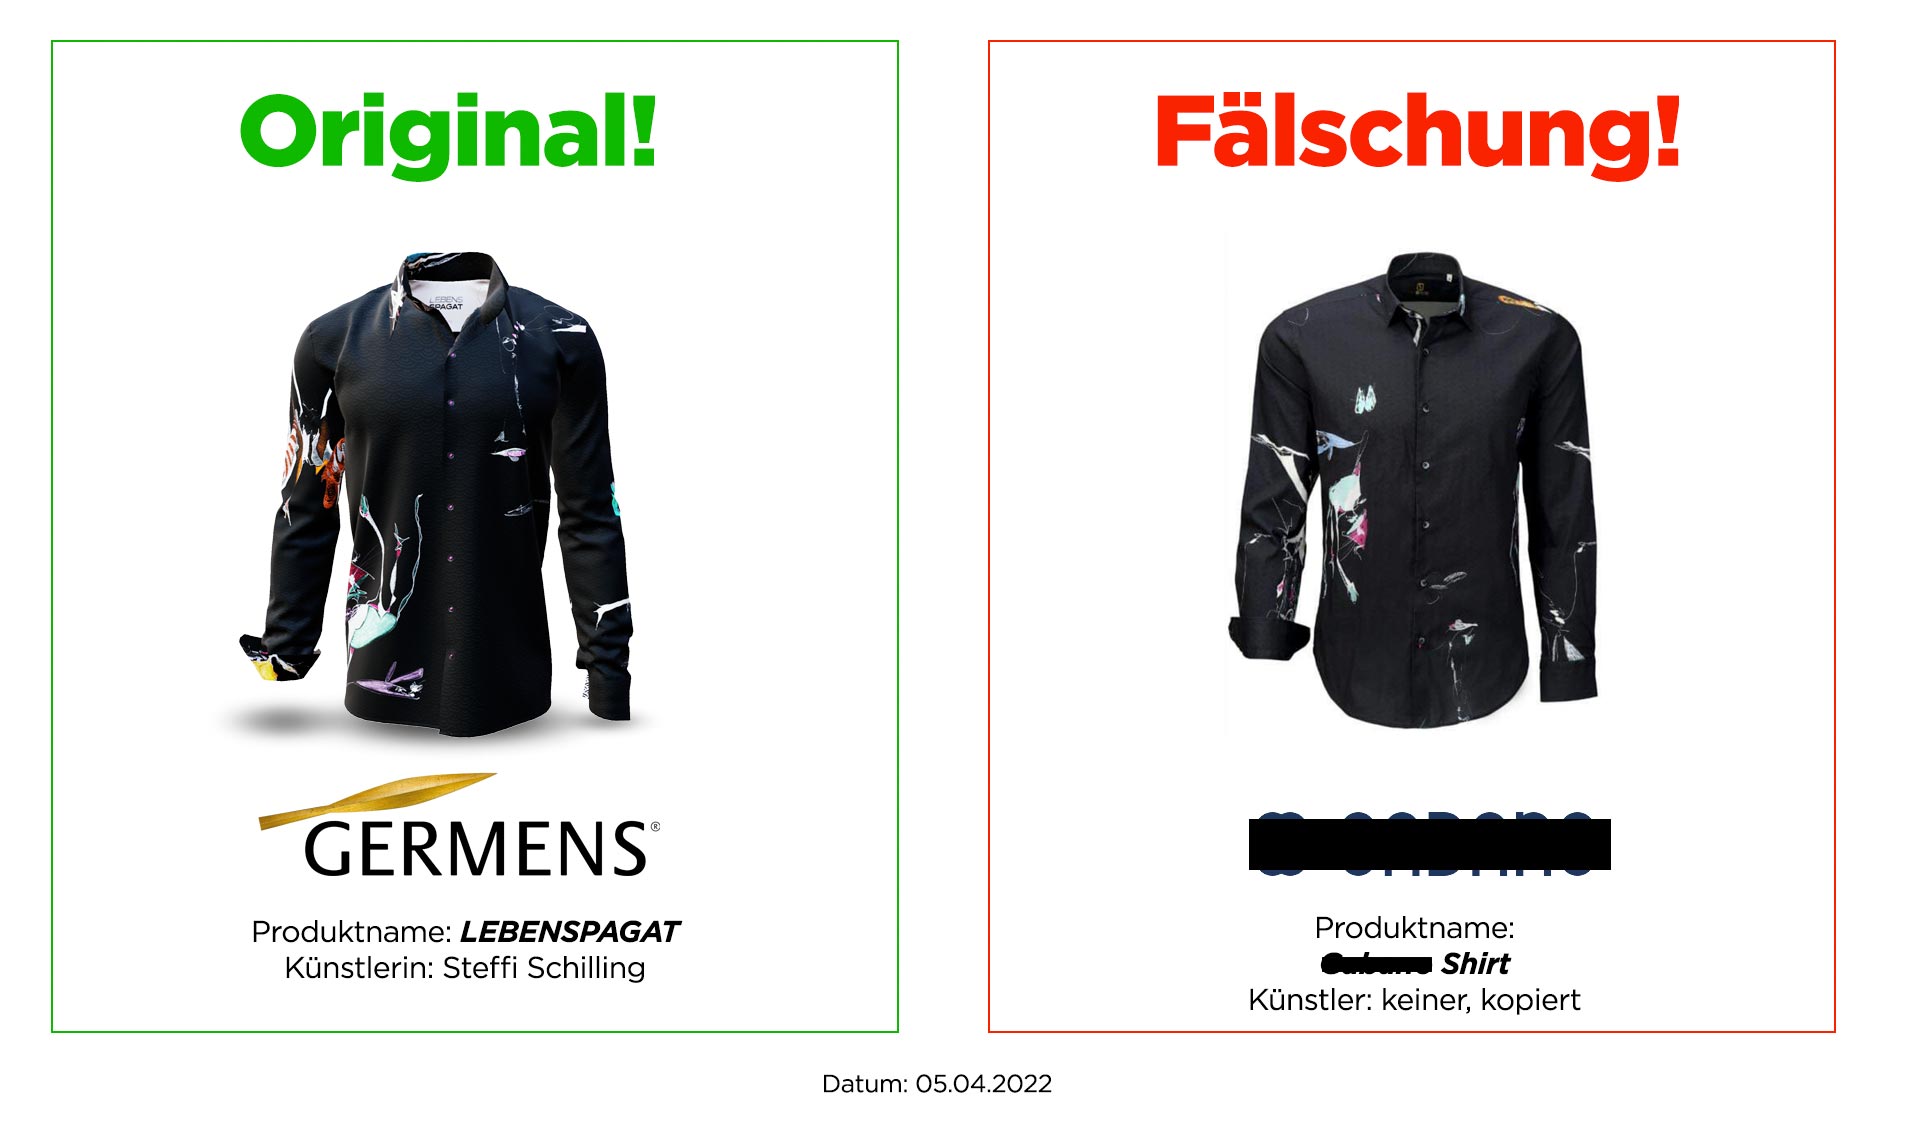 Original GERMENS® Hemd LEBENSSPAGAT und Plagiat